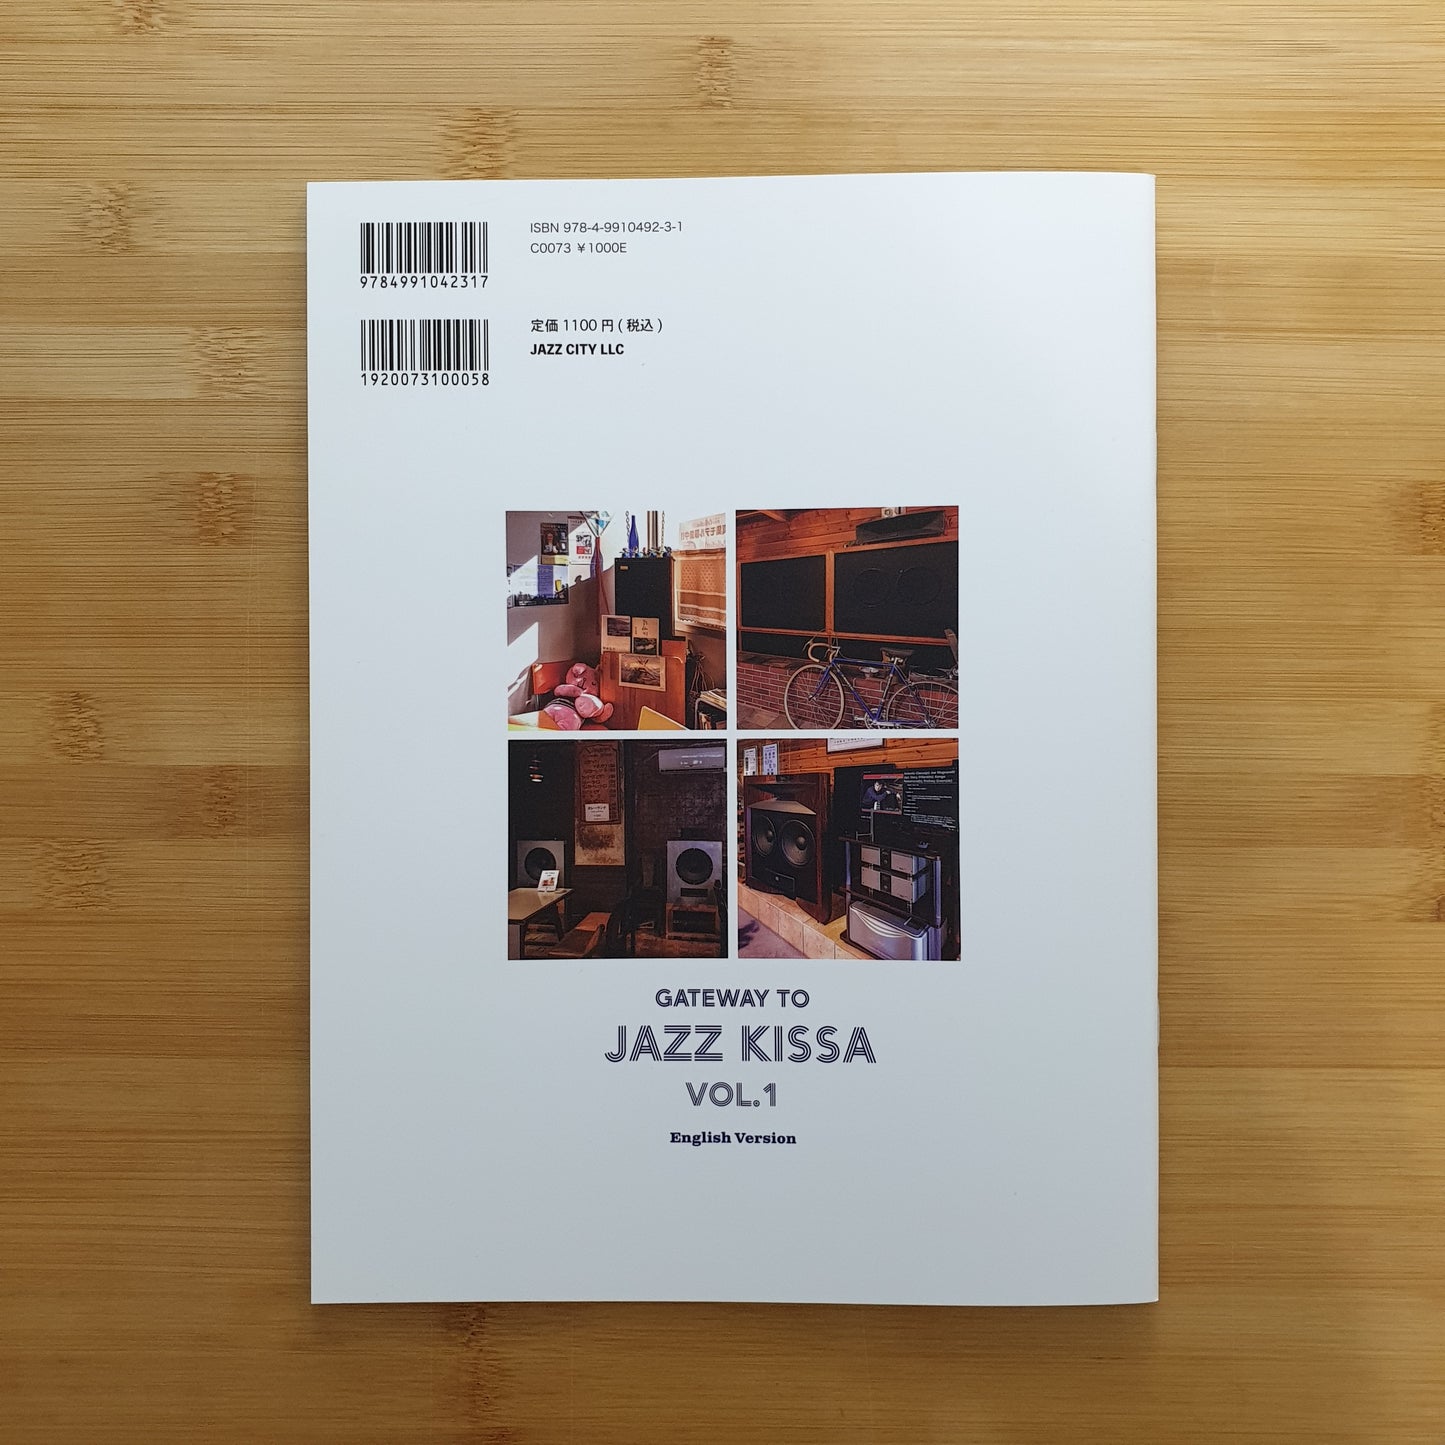 Gateway To Jazz Kissa - Vol. 1 English Version